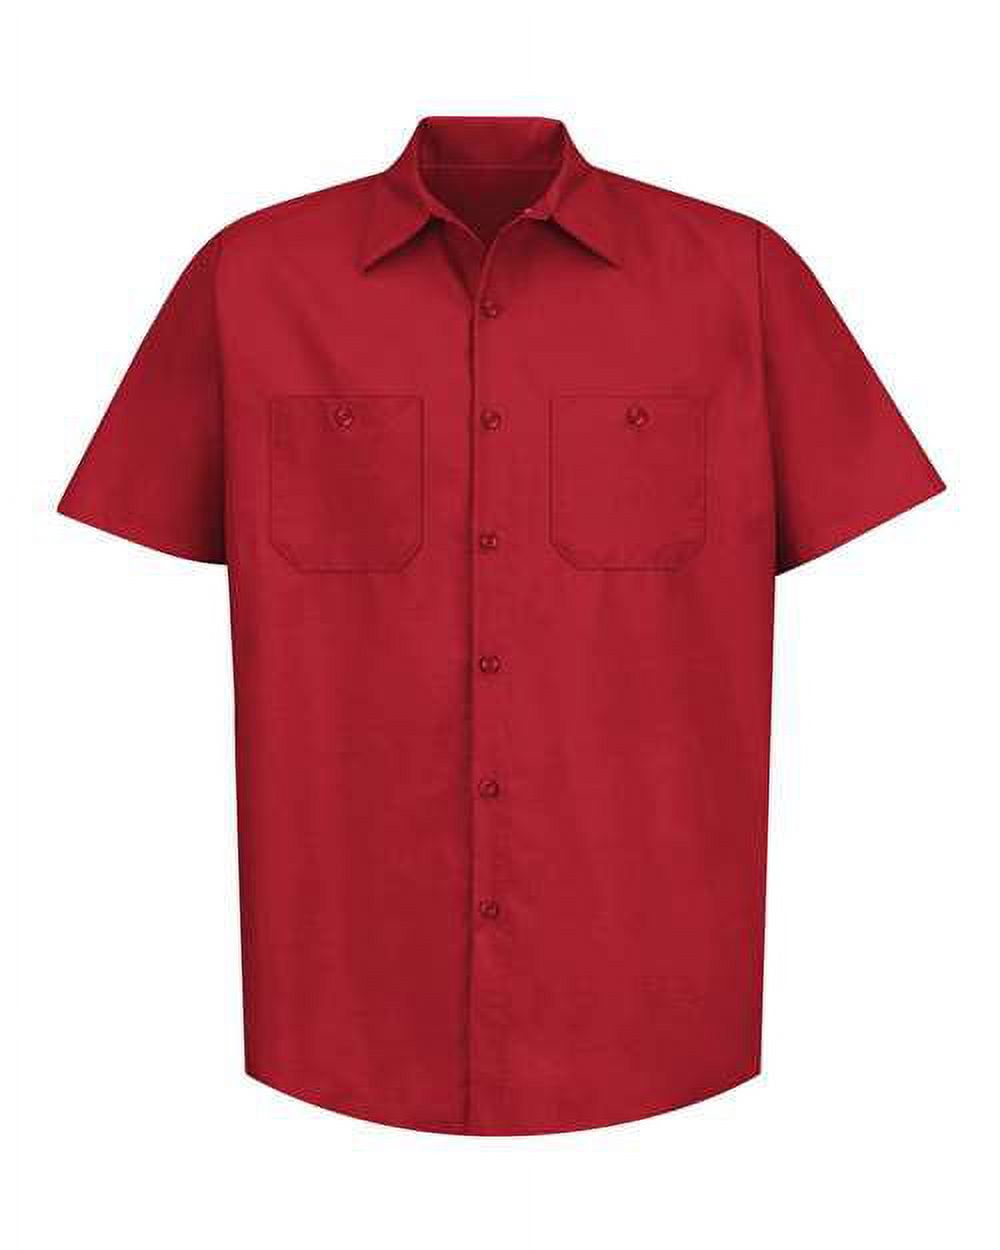 Red Kap® Men's Short Sleeve Industrial Work Shirt - image 2 of 3